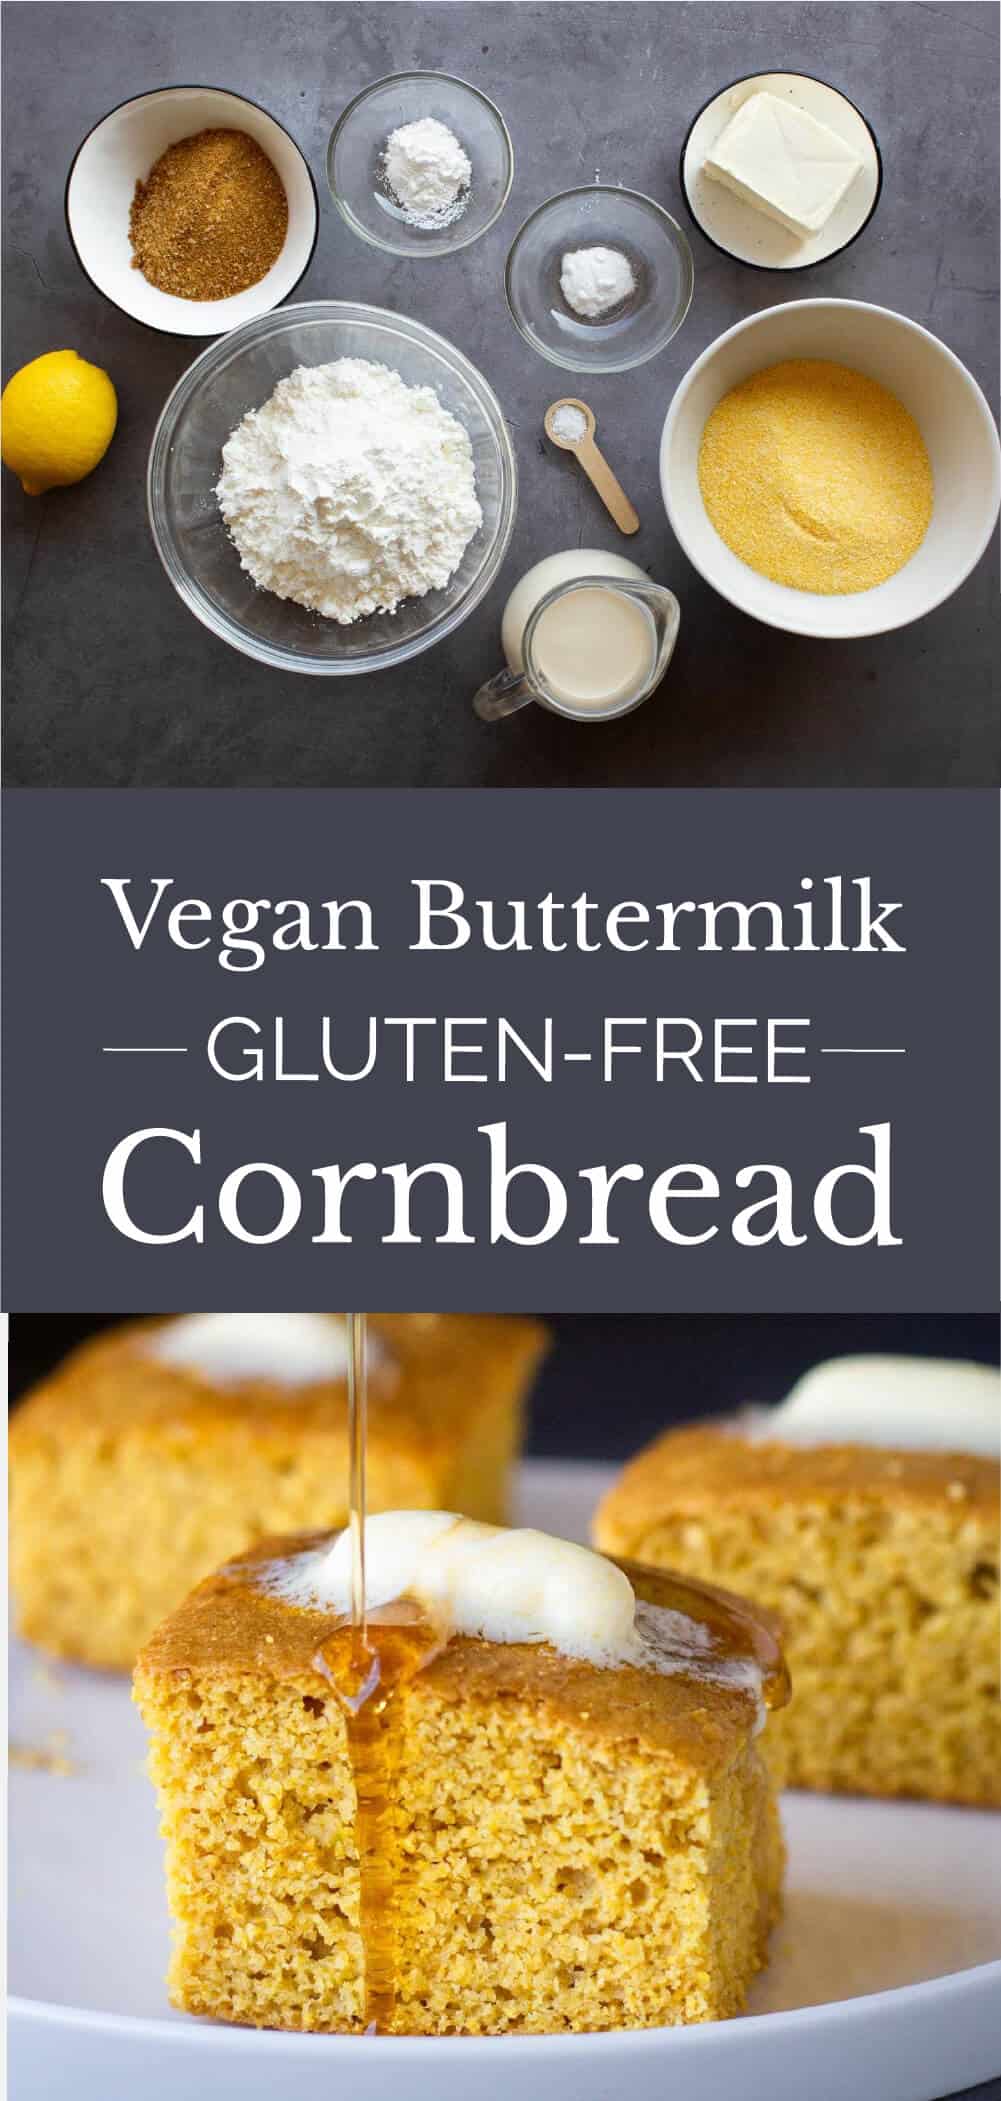 Vegan Buttermilk Gluten-Free Cornbread